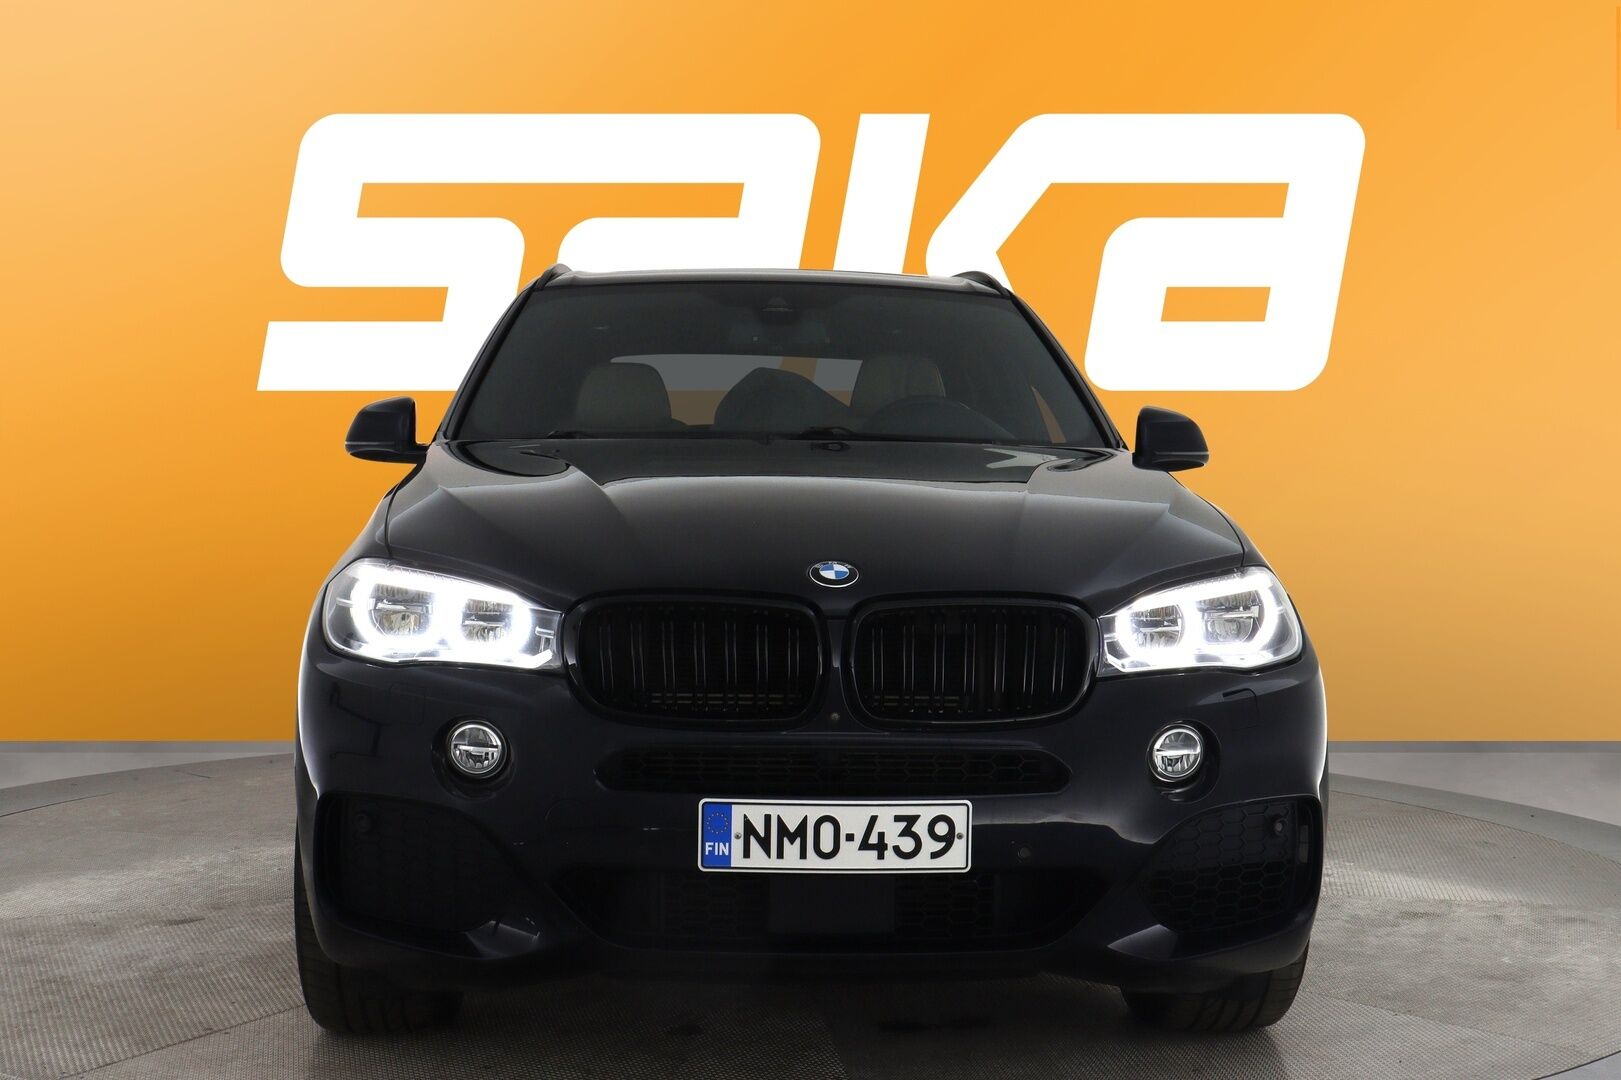 Musta Maastoauto, BMW X5 – NMO-439